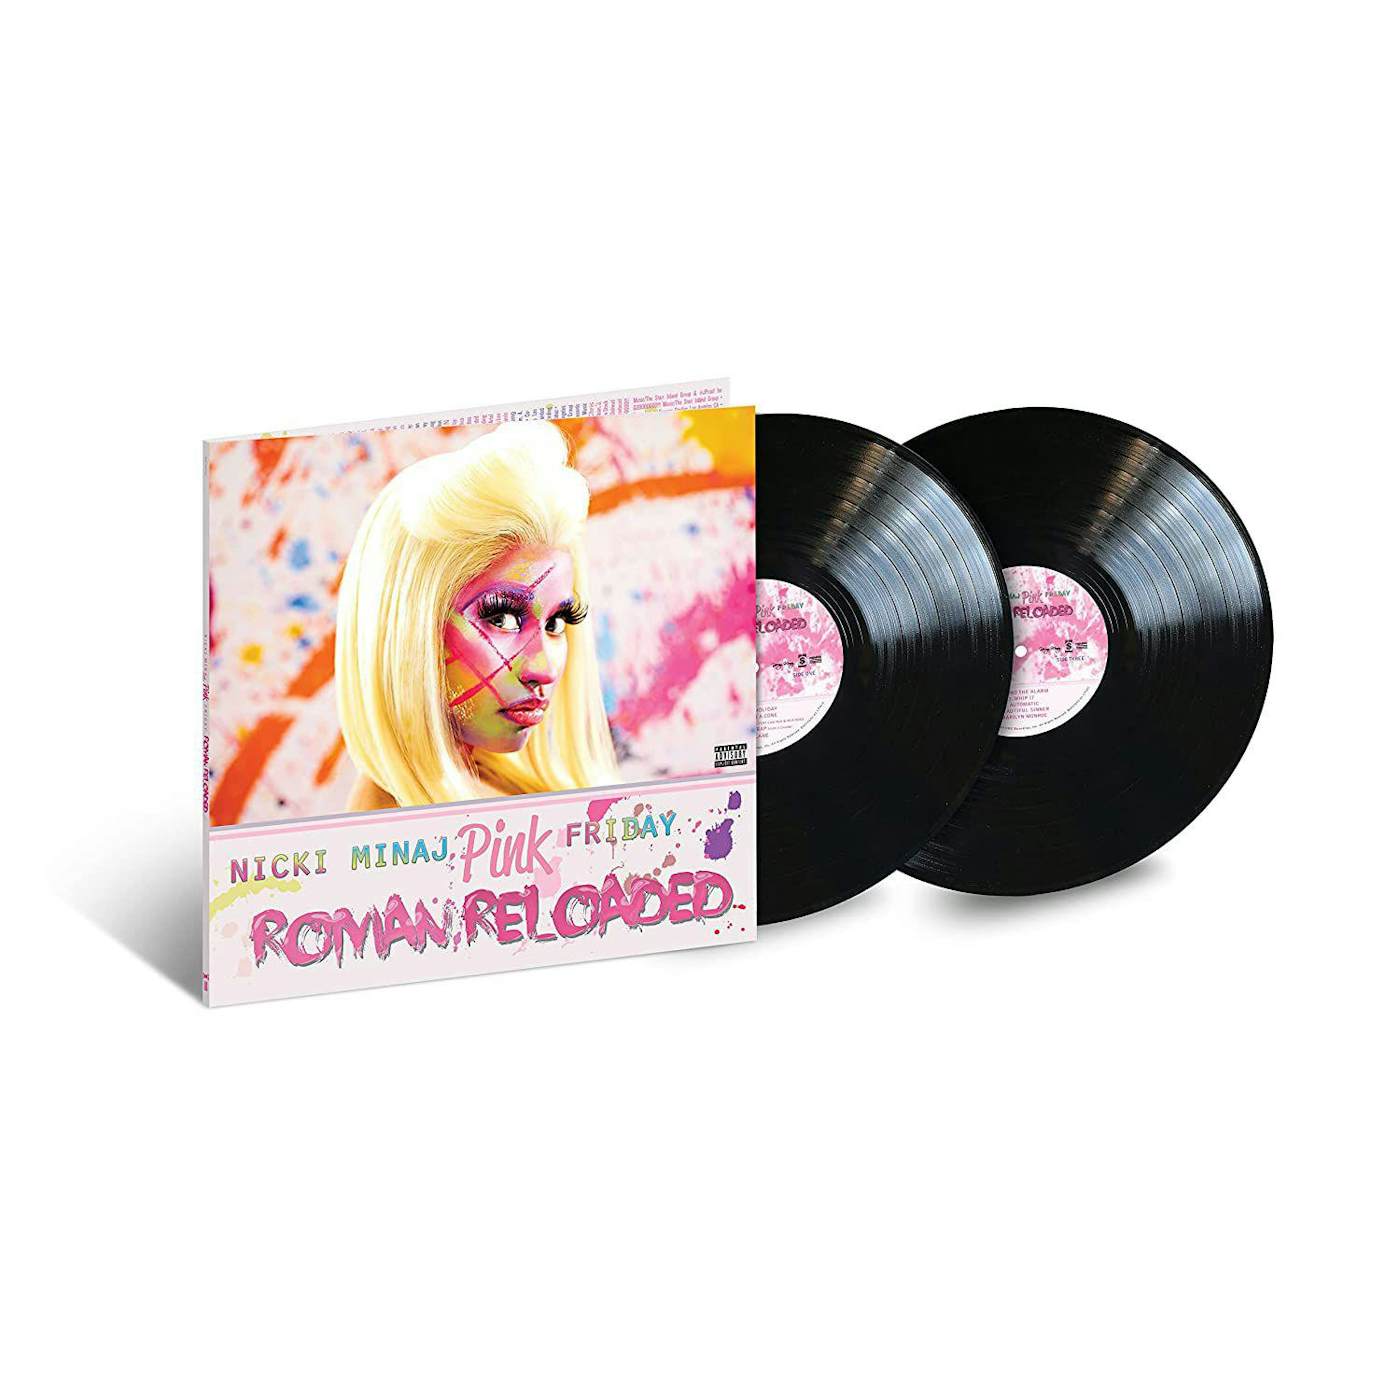 Nicki Minaj Pink Friday...Roman Reloaded (2lp) Vinyl Record